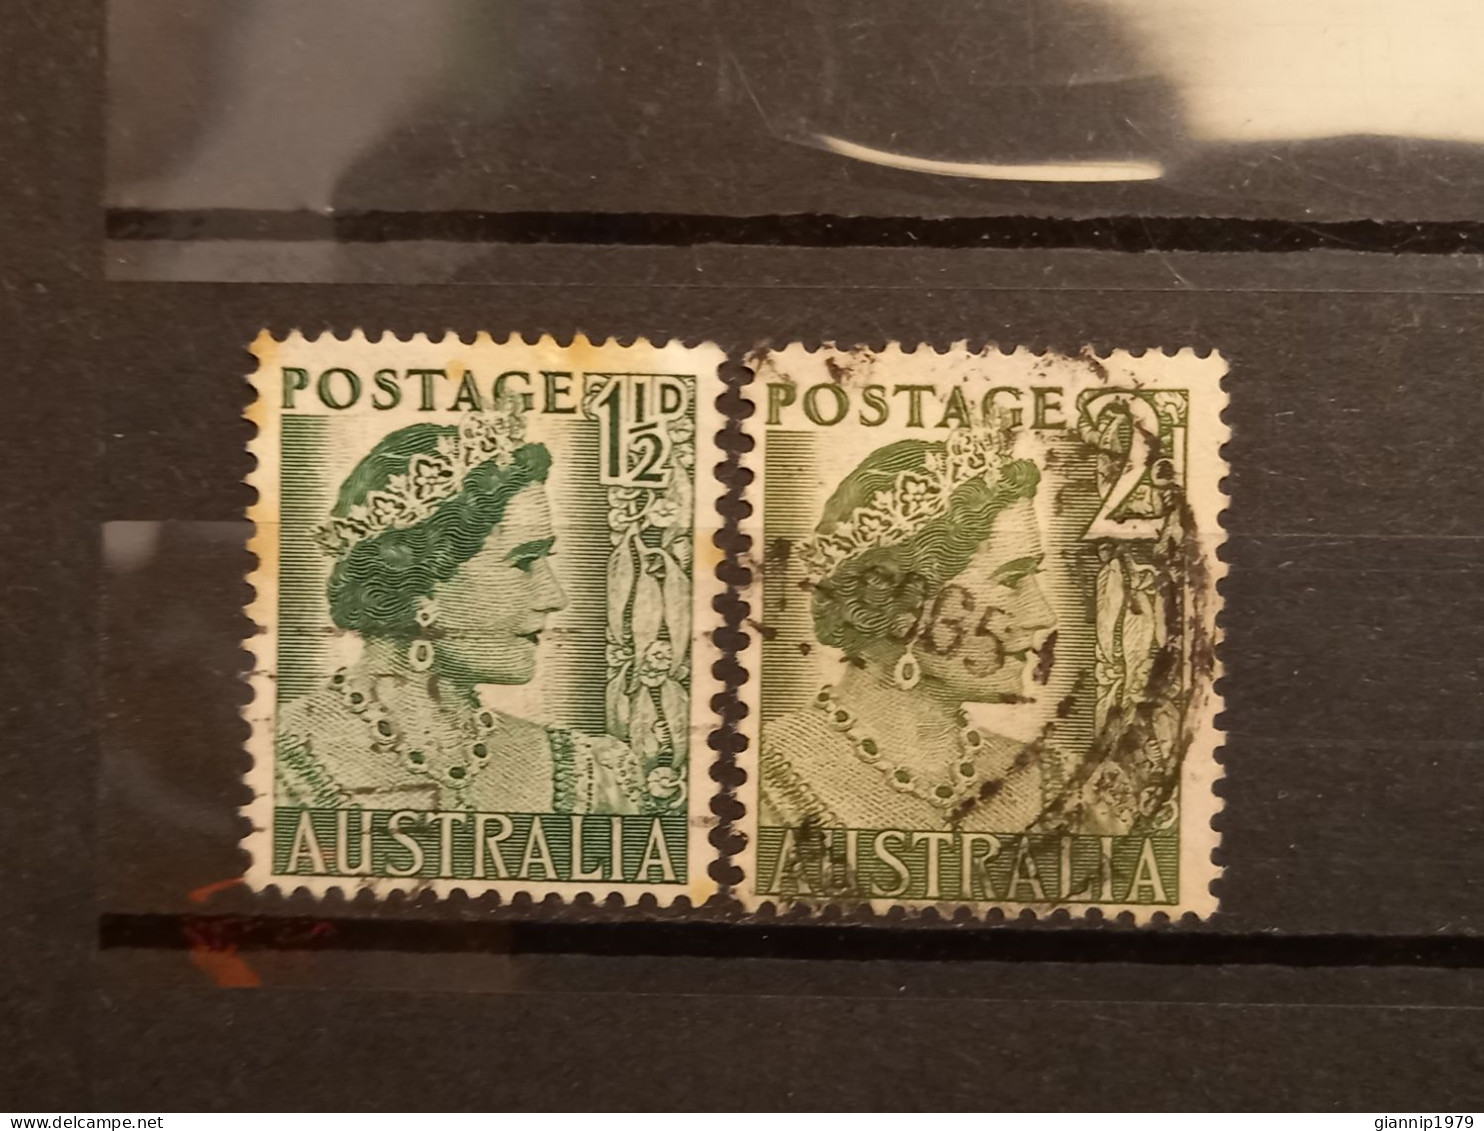 FRANCOBOLLI STAMPS AUSTRALIA AUSTRALIAN 1950 USED SERIE COMPLETA COMPLETE REGINA ELISABETTA ELIZABETH QUEEN OBLITERE' - Oblitérés